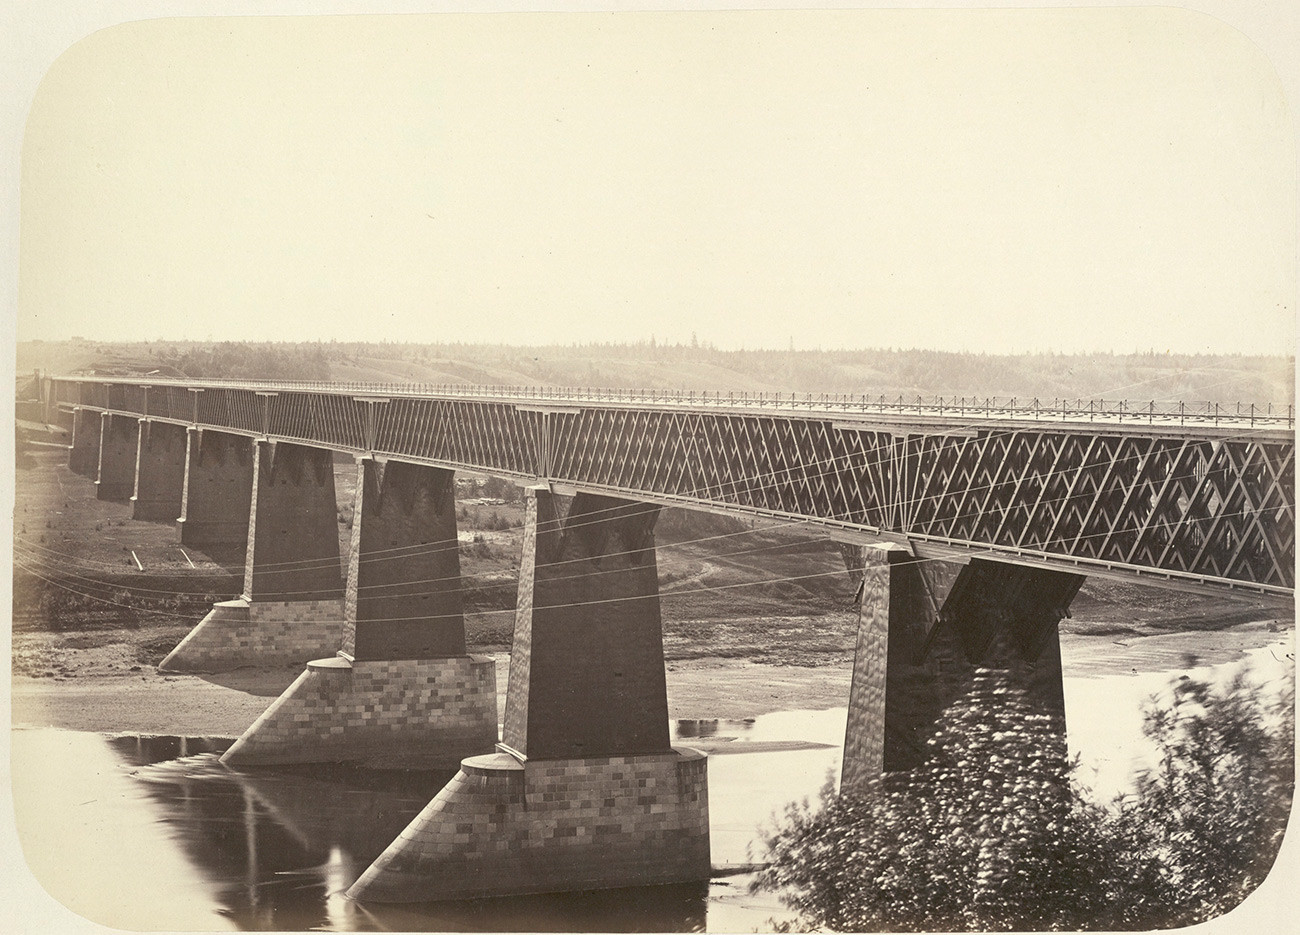 The Msta bridge that burned down in 1869